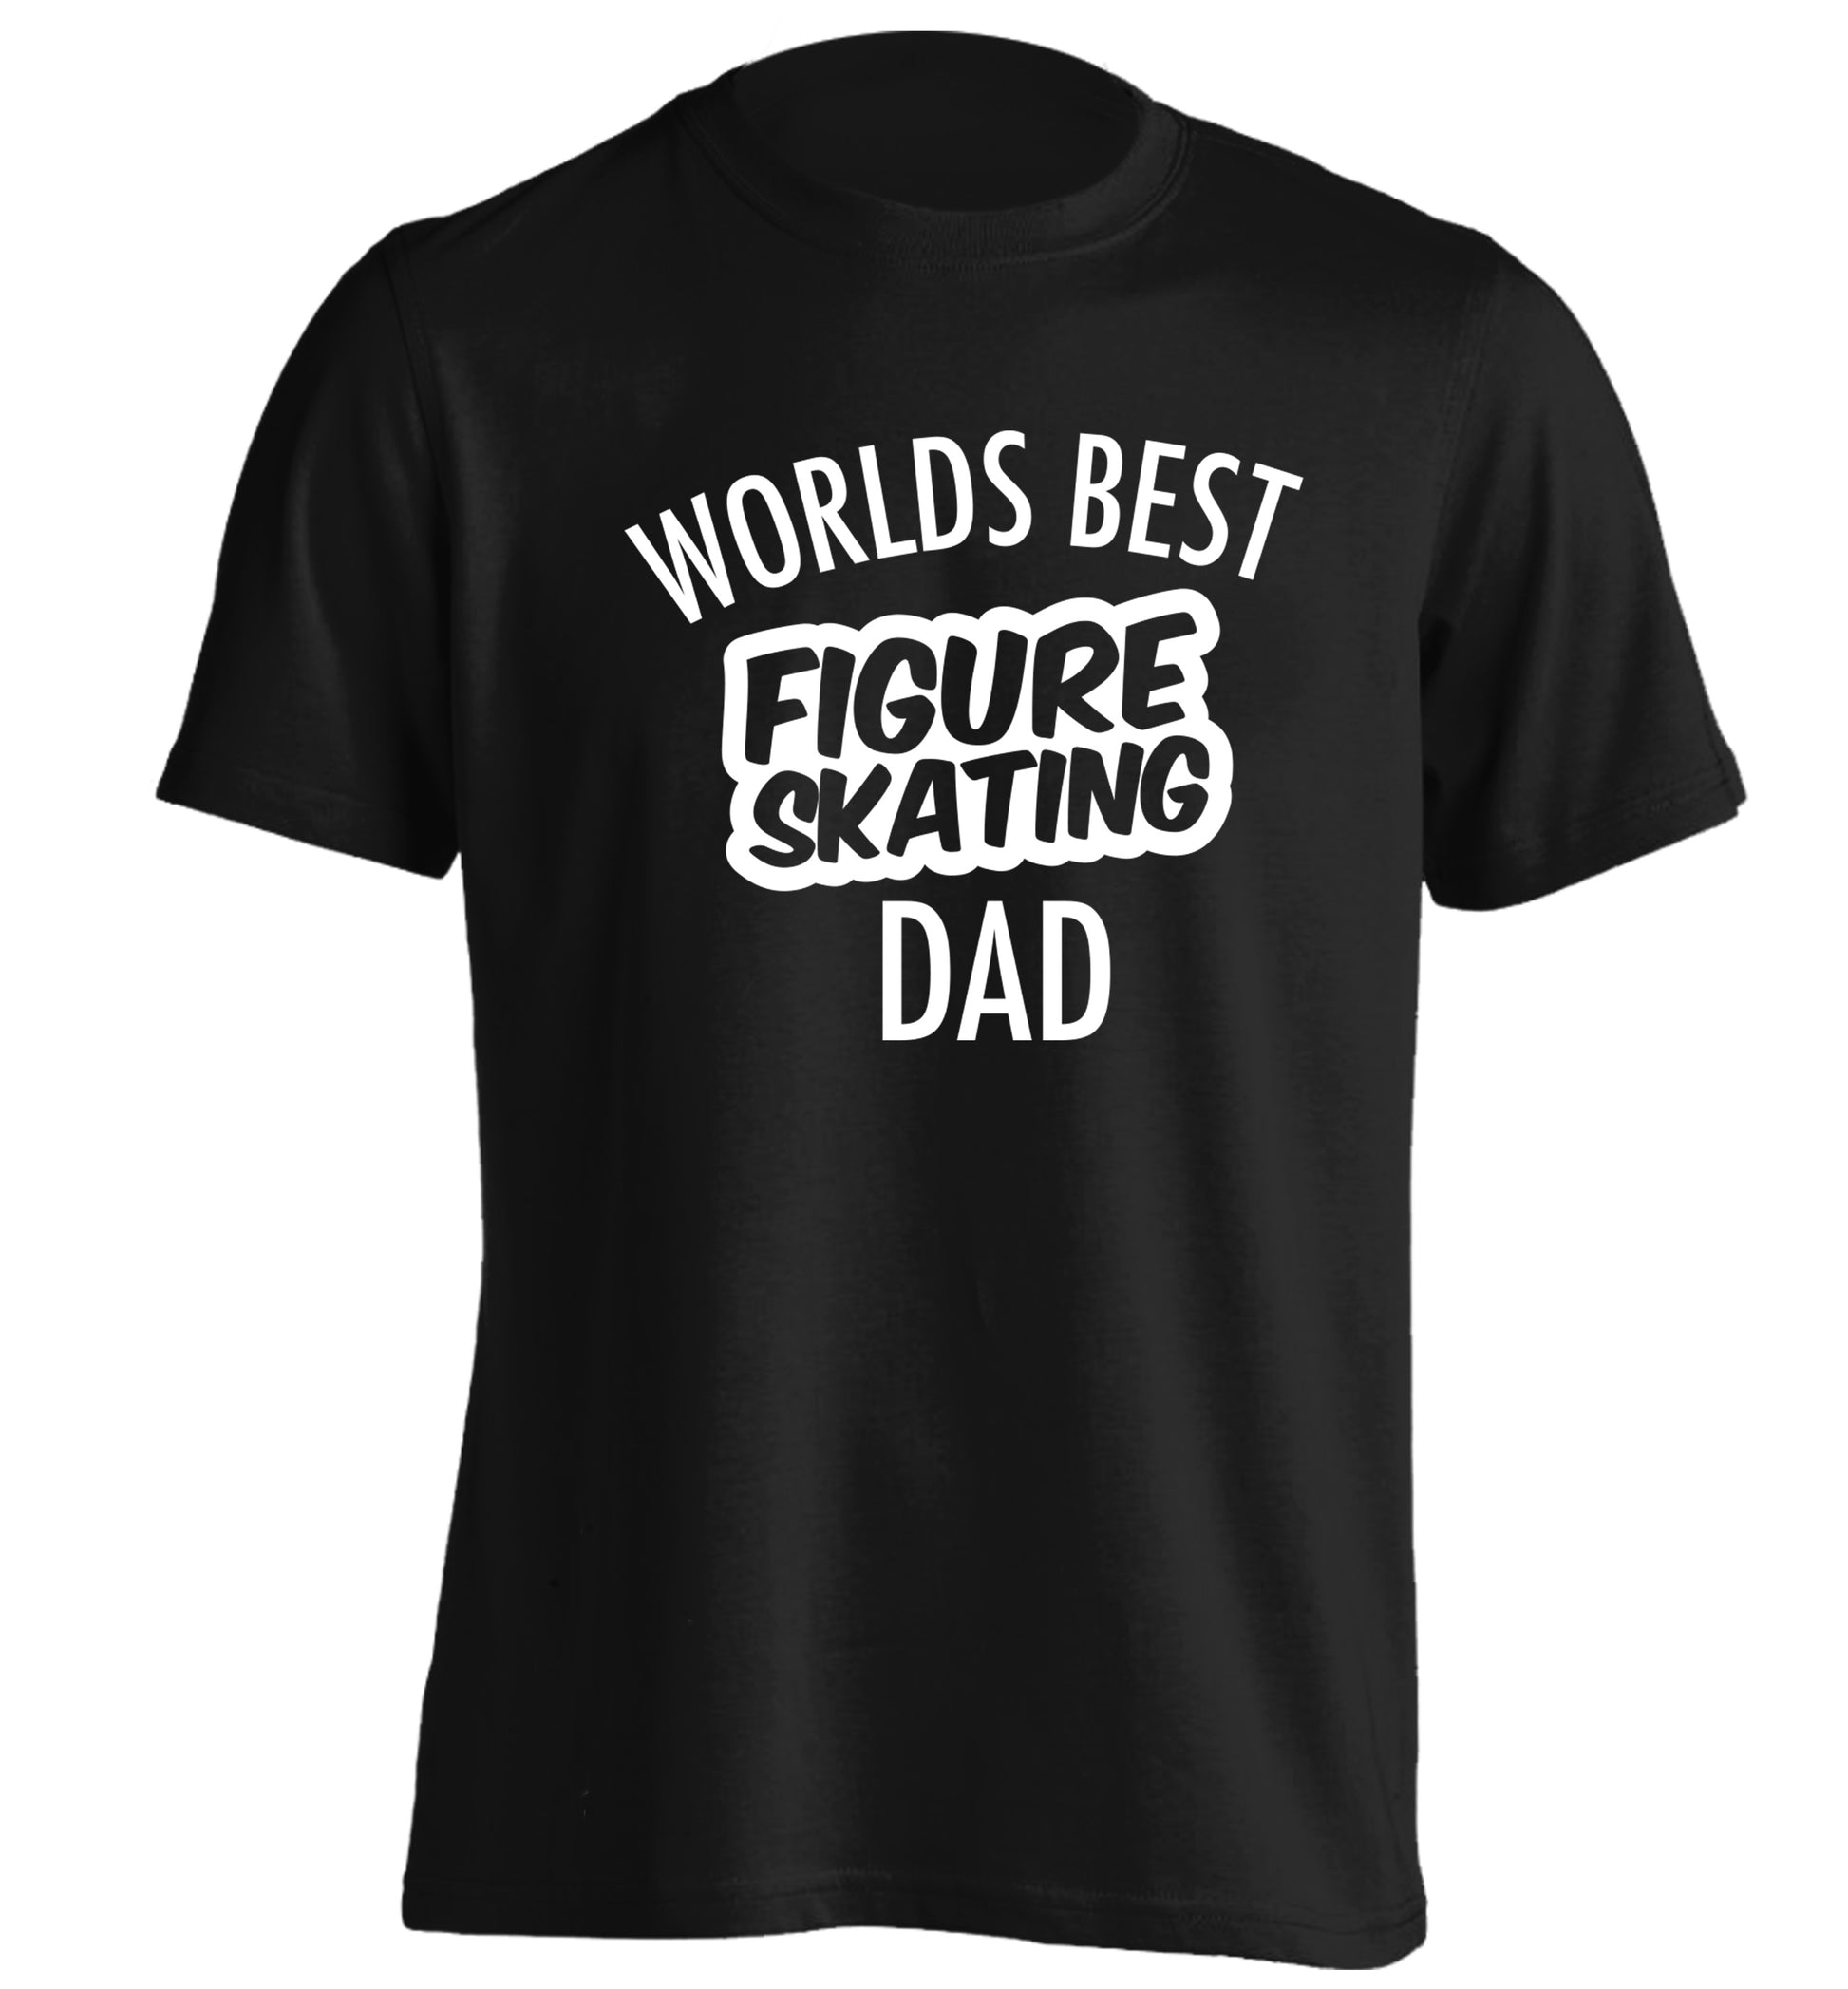 Worlds best figure skating dad adults unisexblack Tshirt 2XL